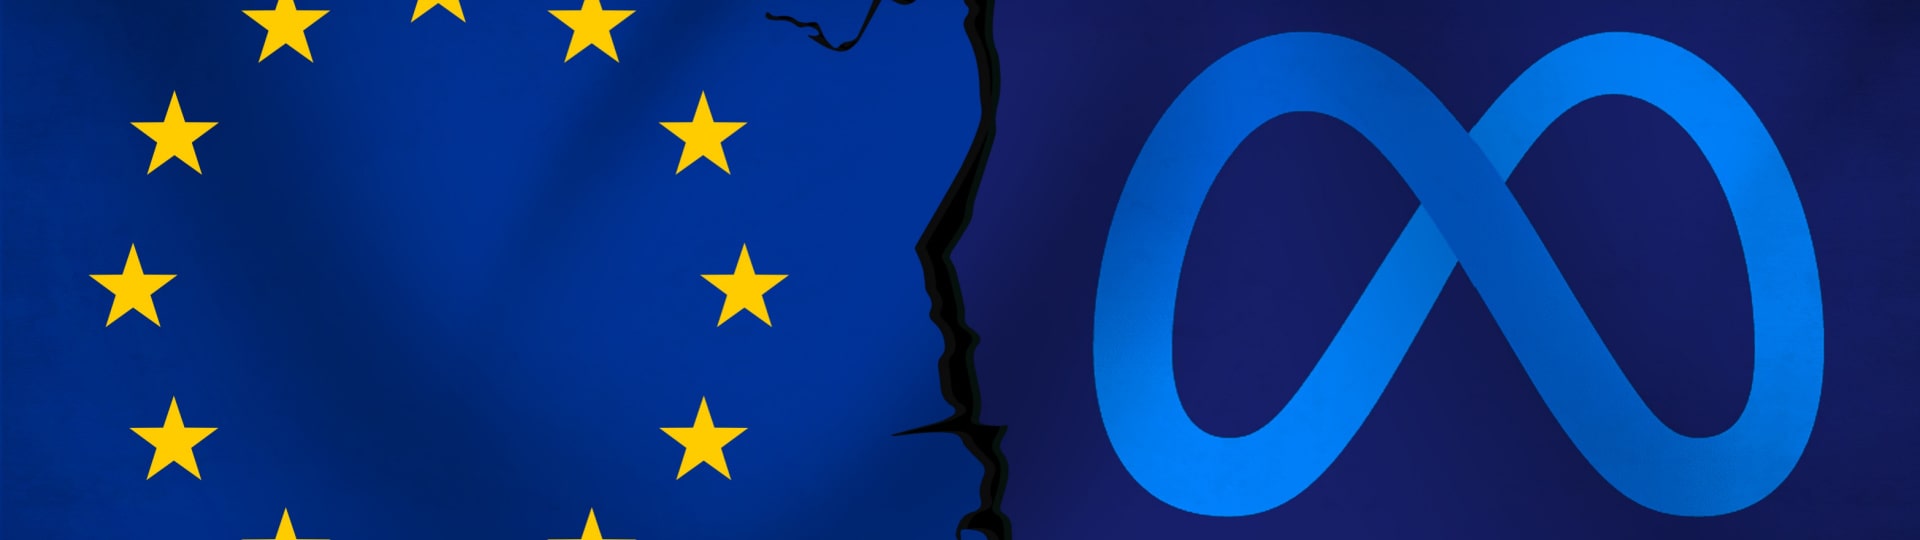 Meta dostala v EU rekordní pokutu 1,2 miliardy eur